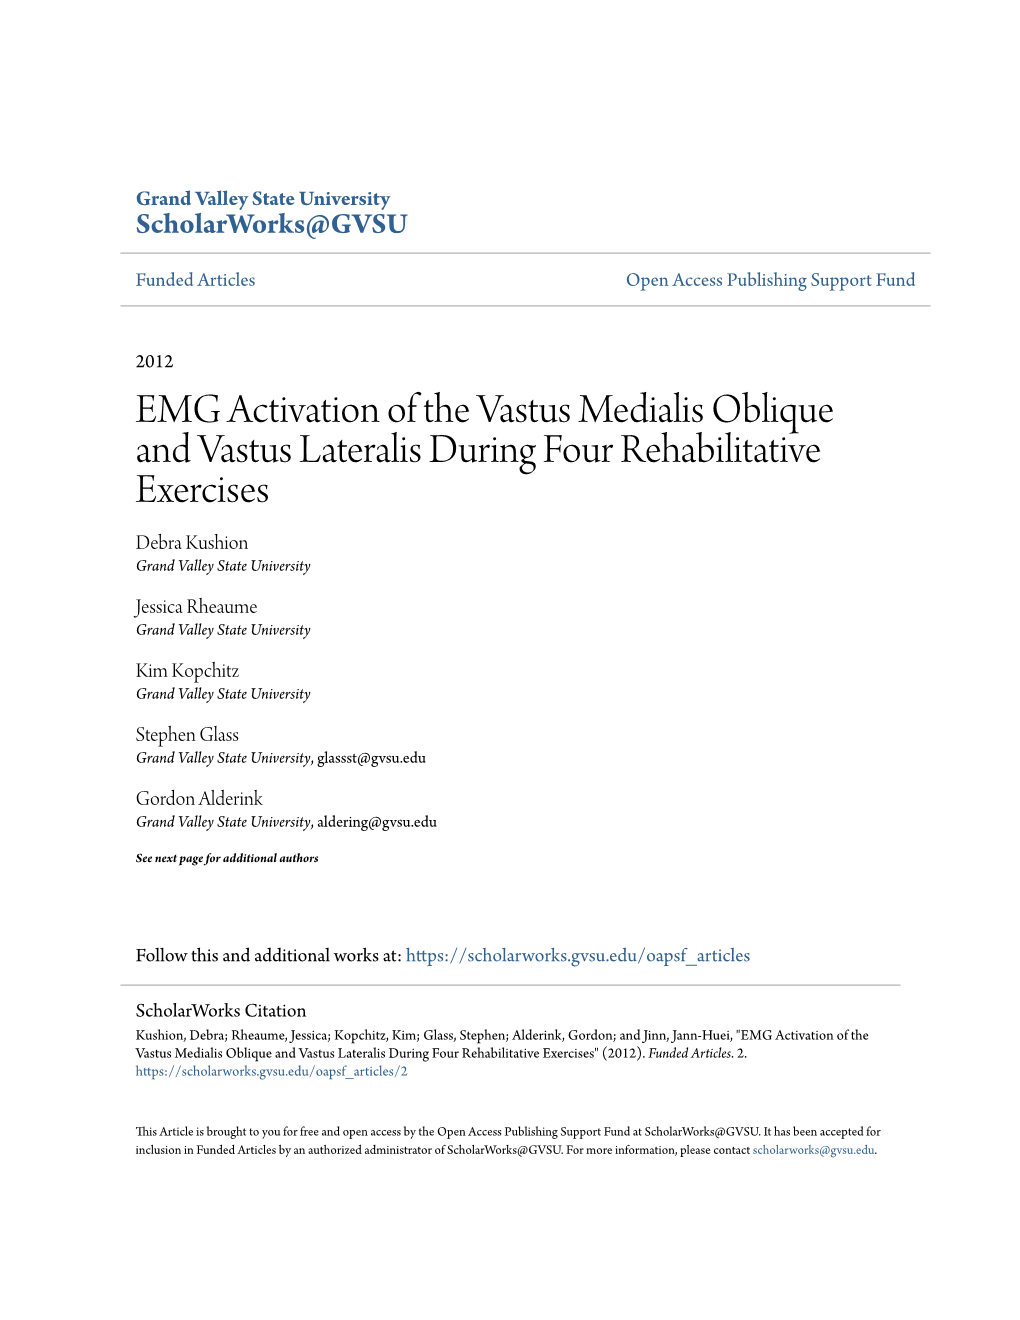 EMG Activation of the Vastus Medialis Oblique and Vastus Lateralis During Four Rehabilitative Exercises Debra Kushion Grand Valley State University